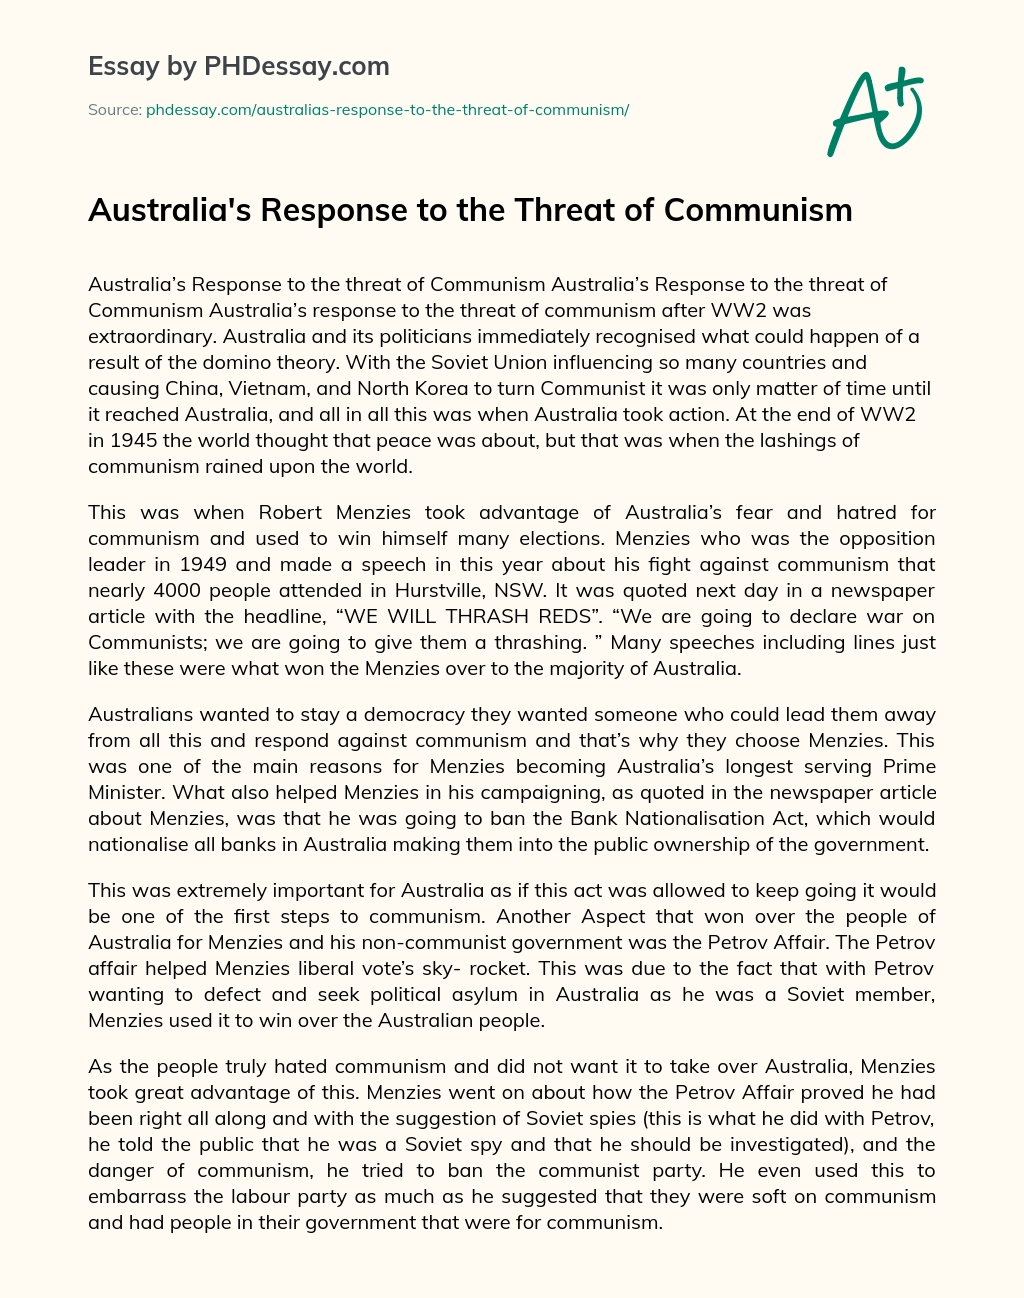 Australia’s Response to the Threat of Communism essay